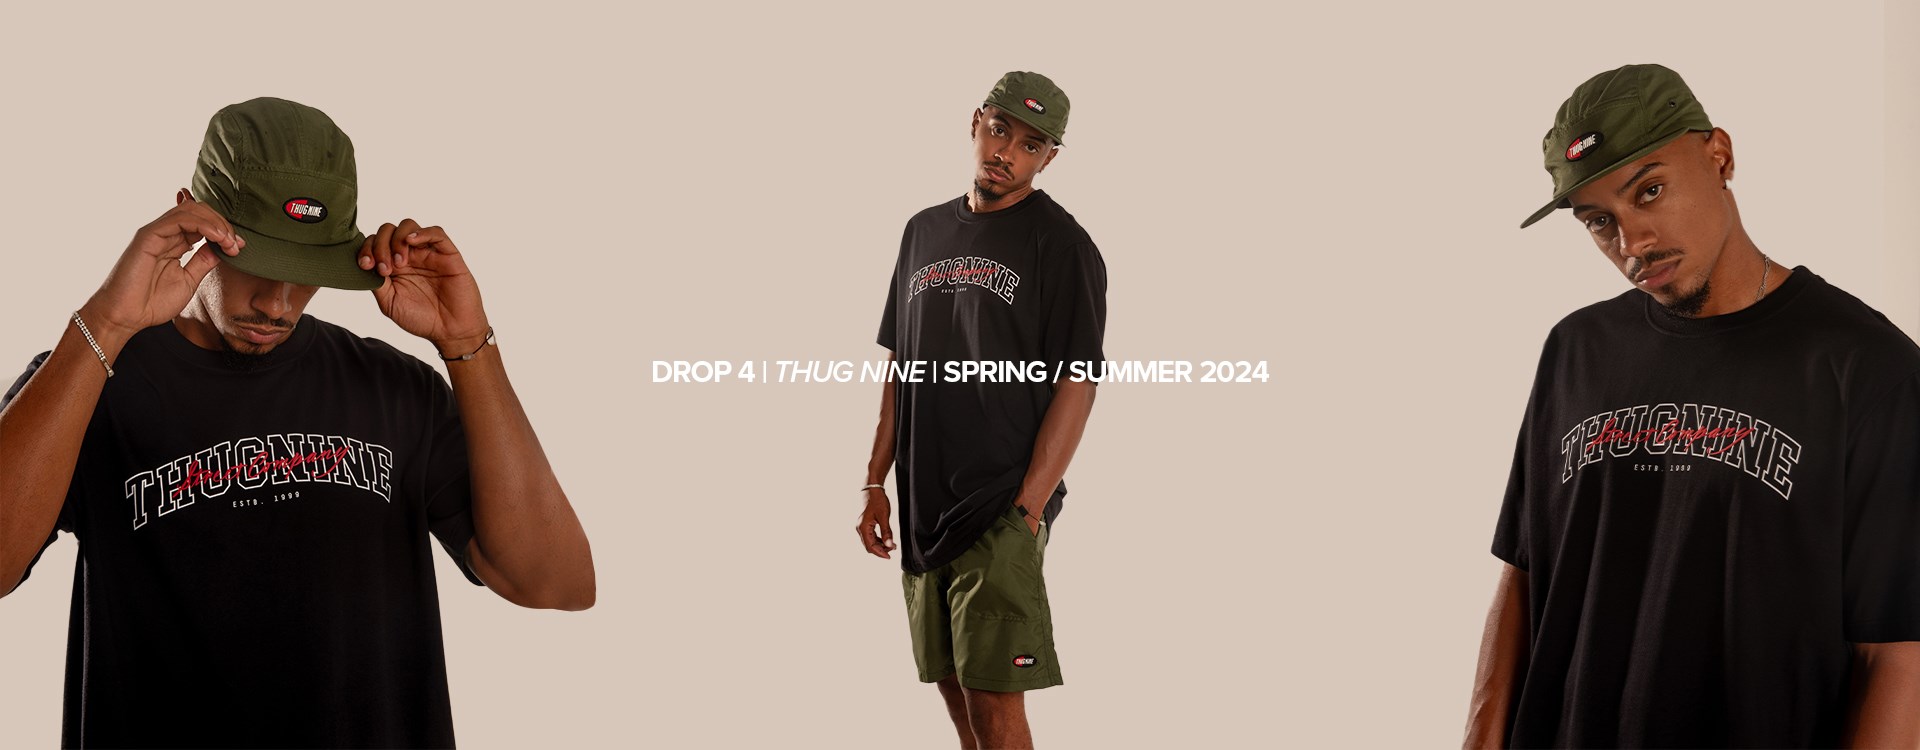 Drop 04 Spring Summer 2024